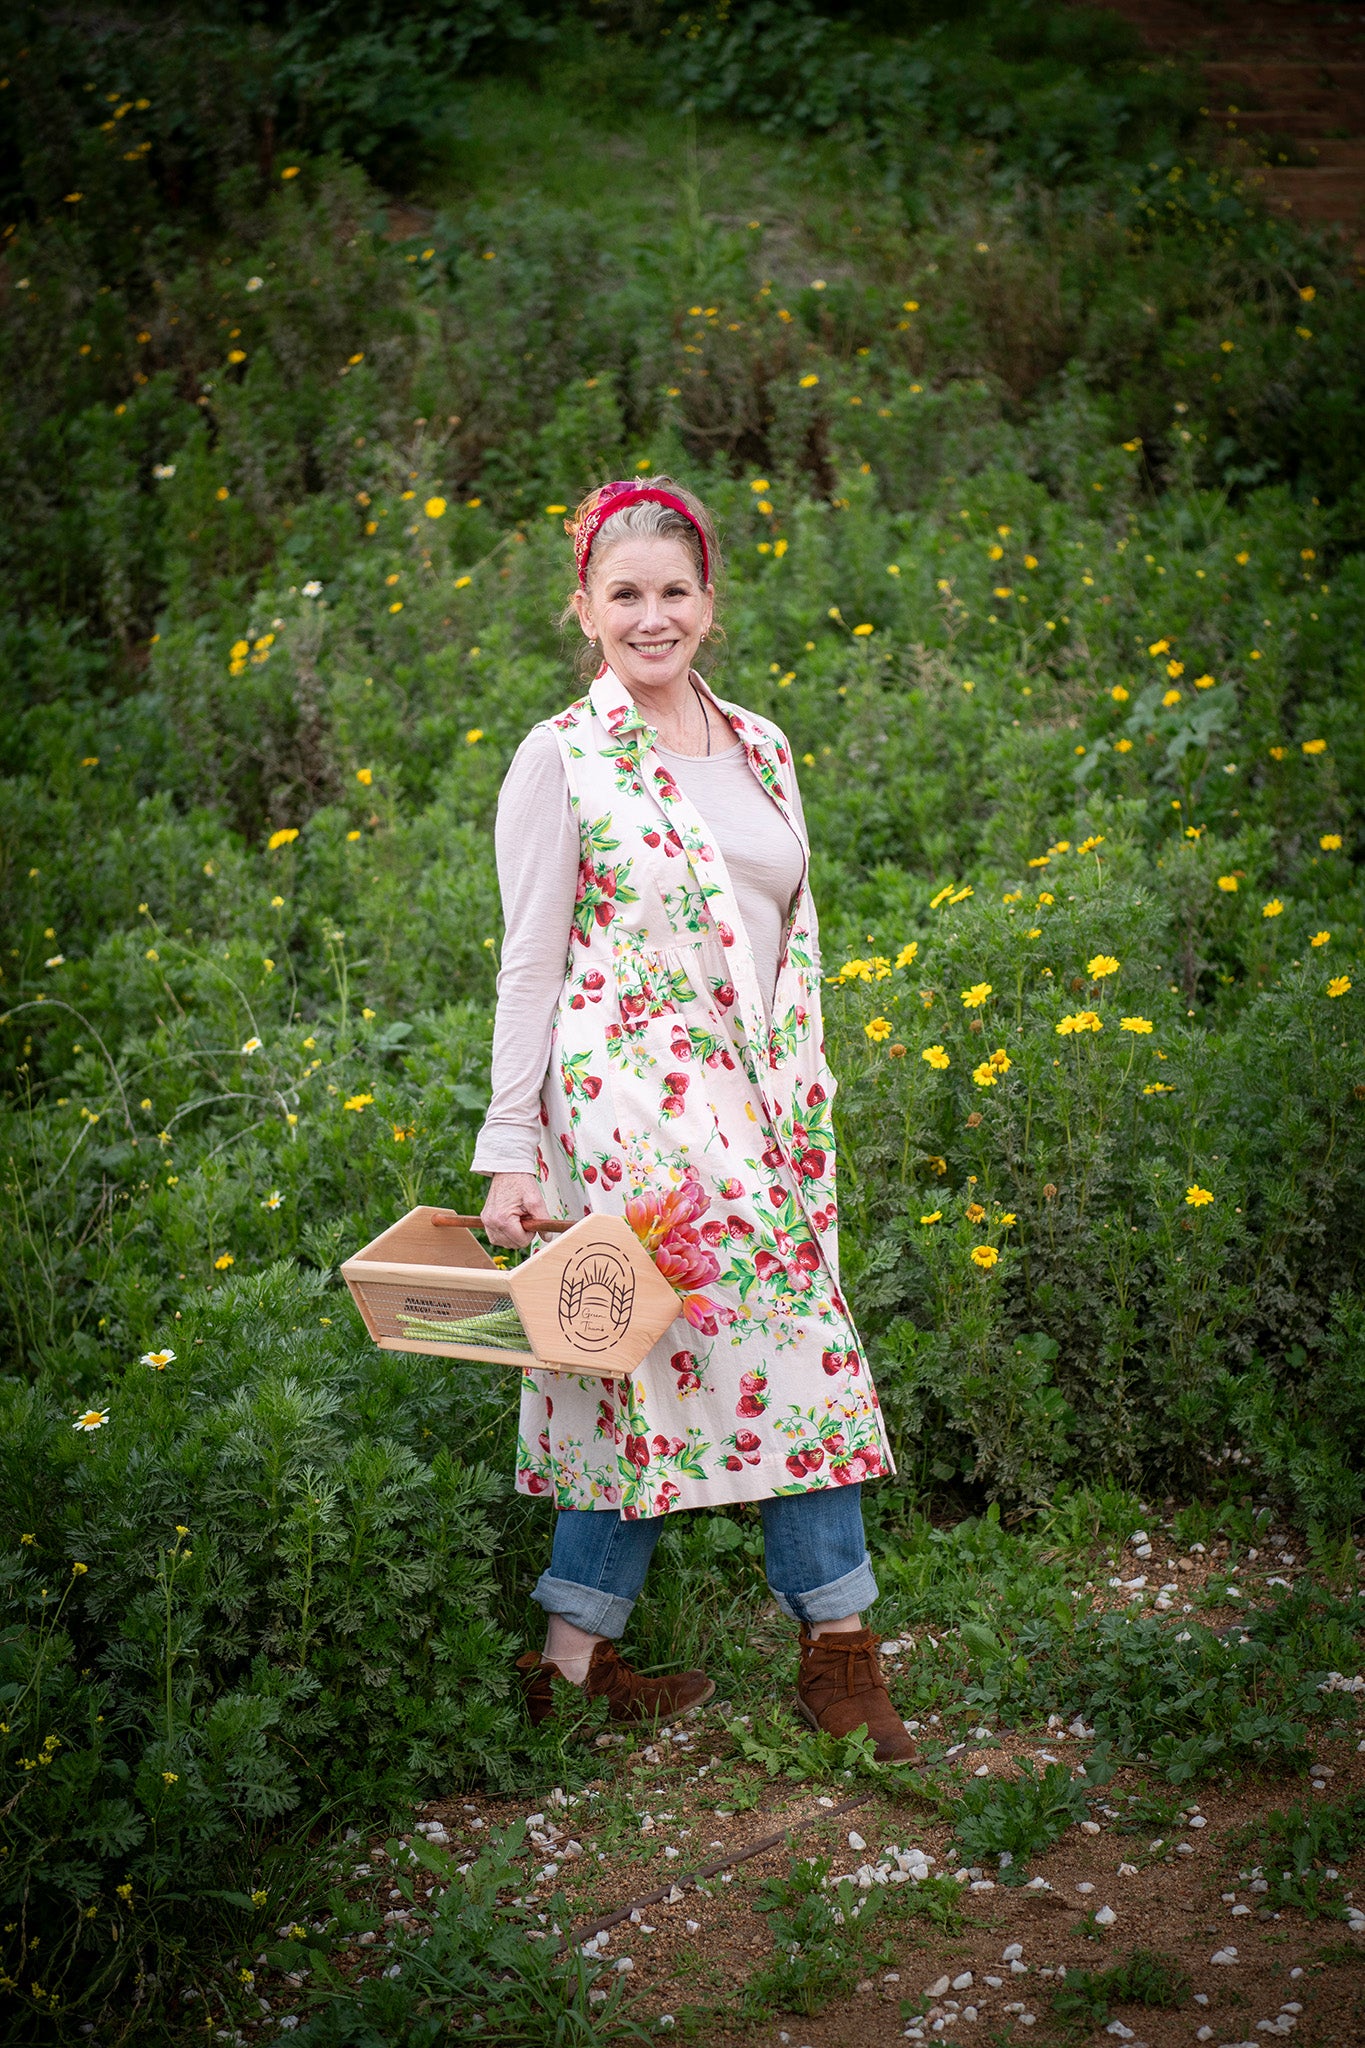 The Strawberry Fields Porch Swing Dress